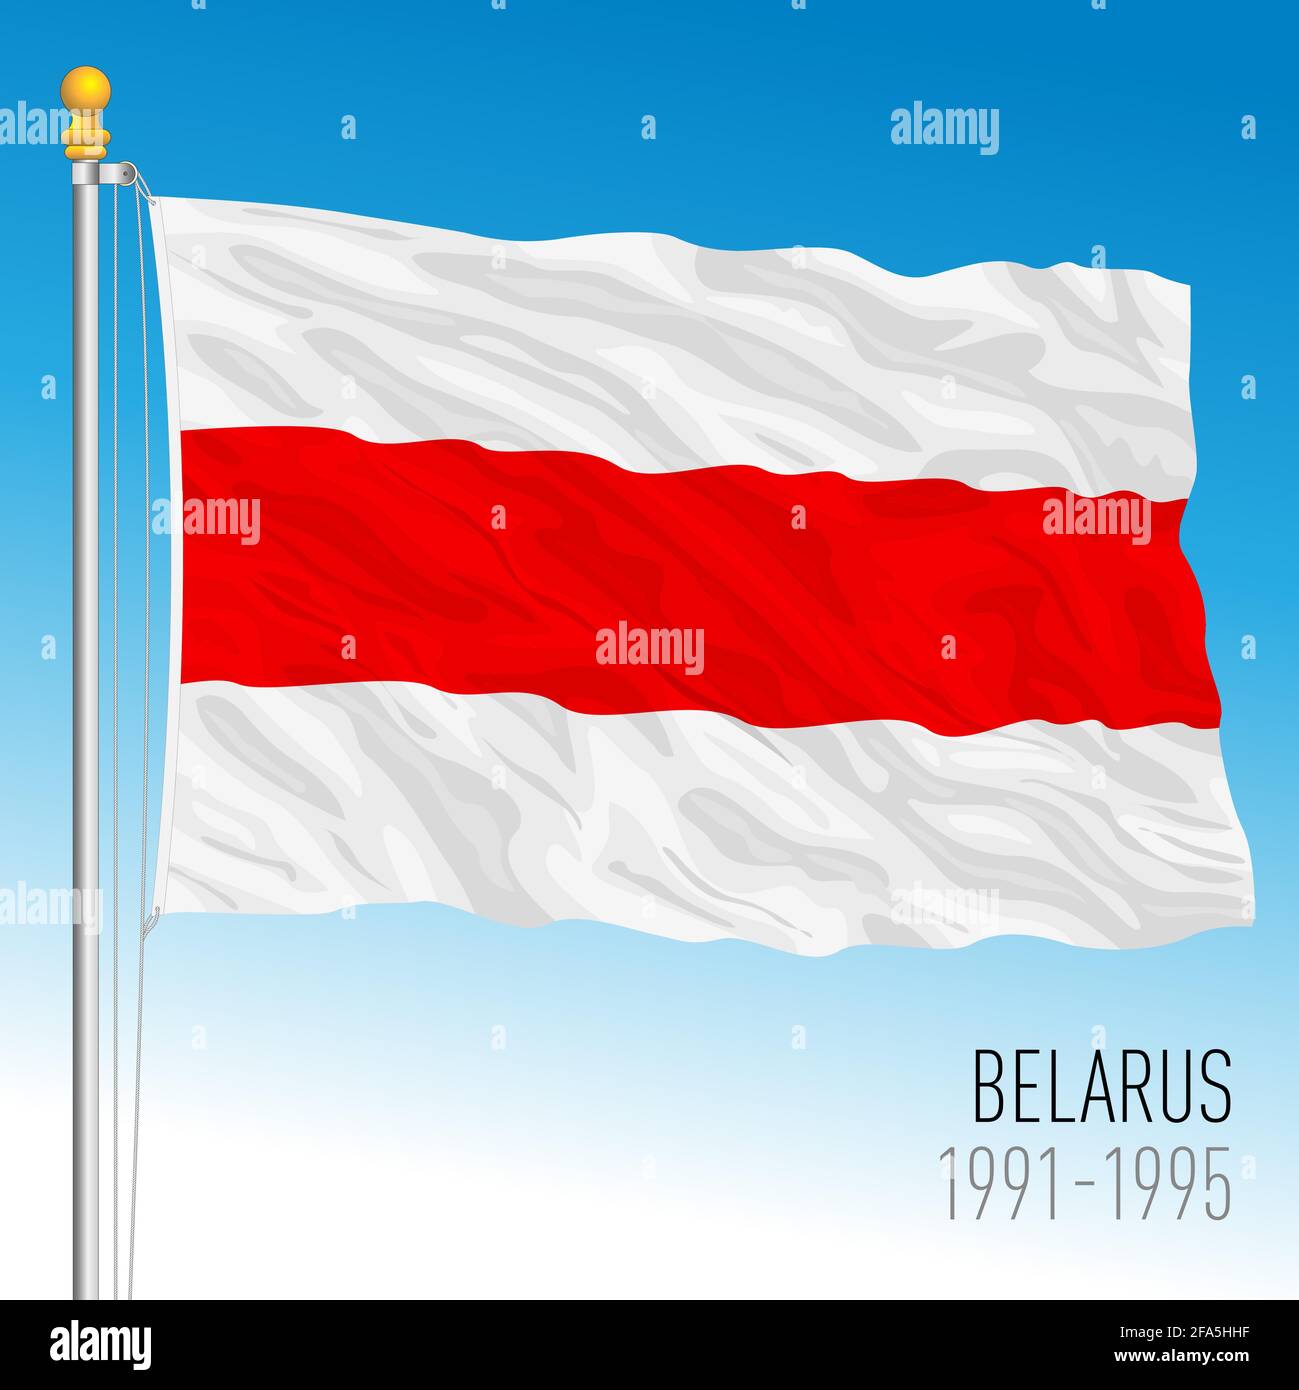 Historische Flagge von Belarus, 1991 - 1995, Vektorgrafik Stock Vektor